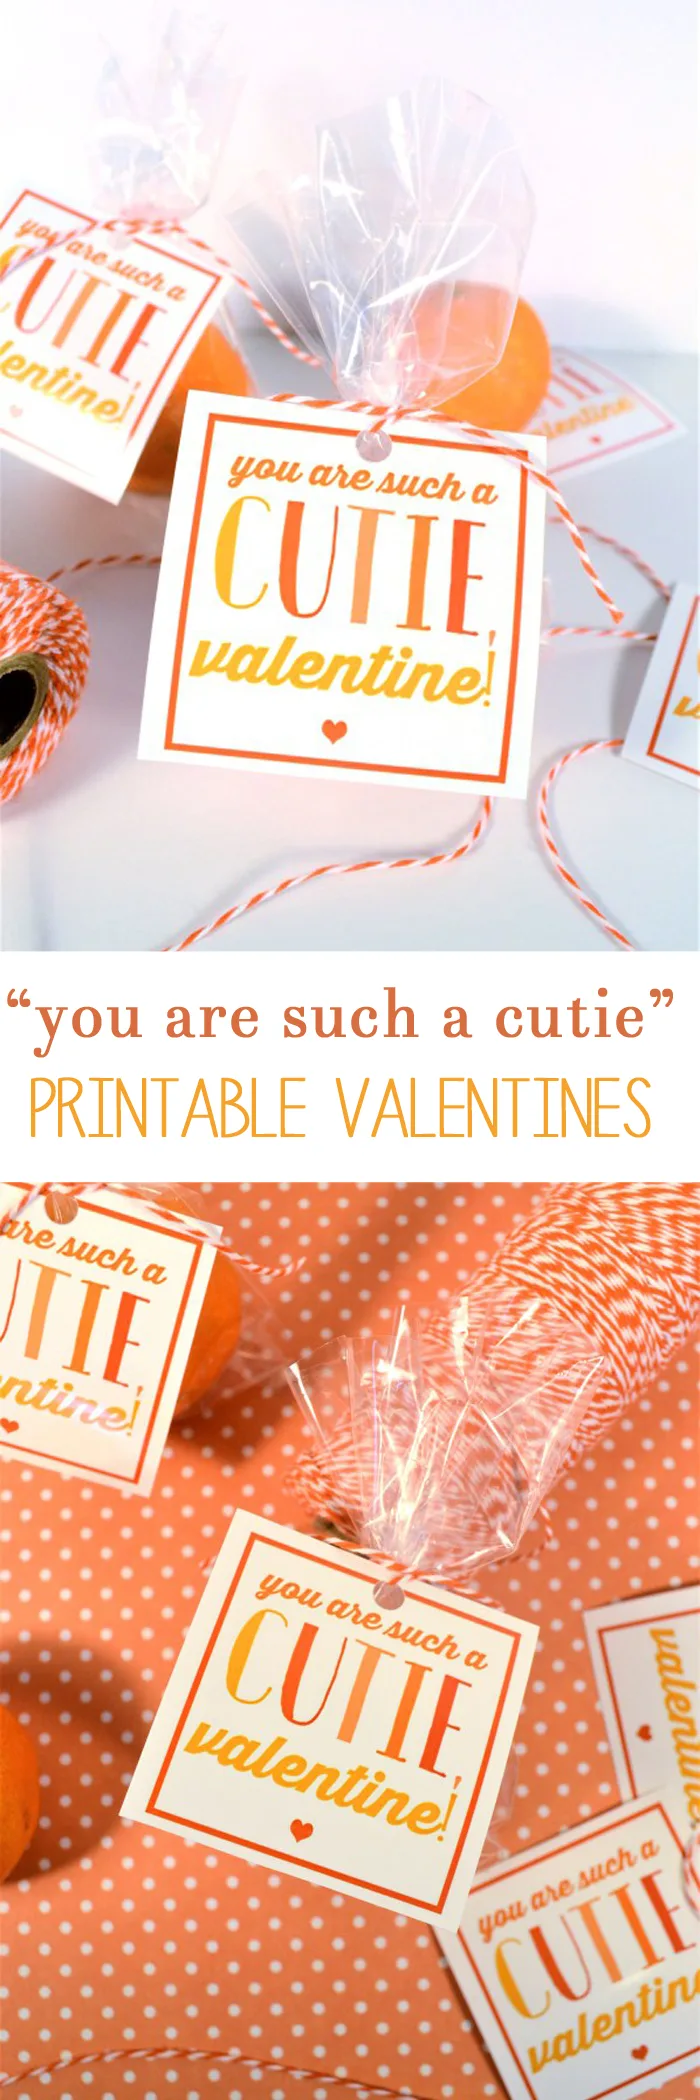 printable valentines